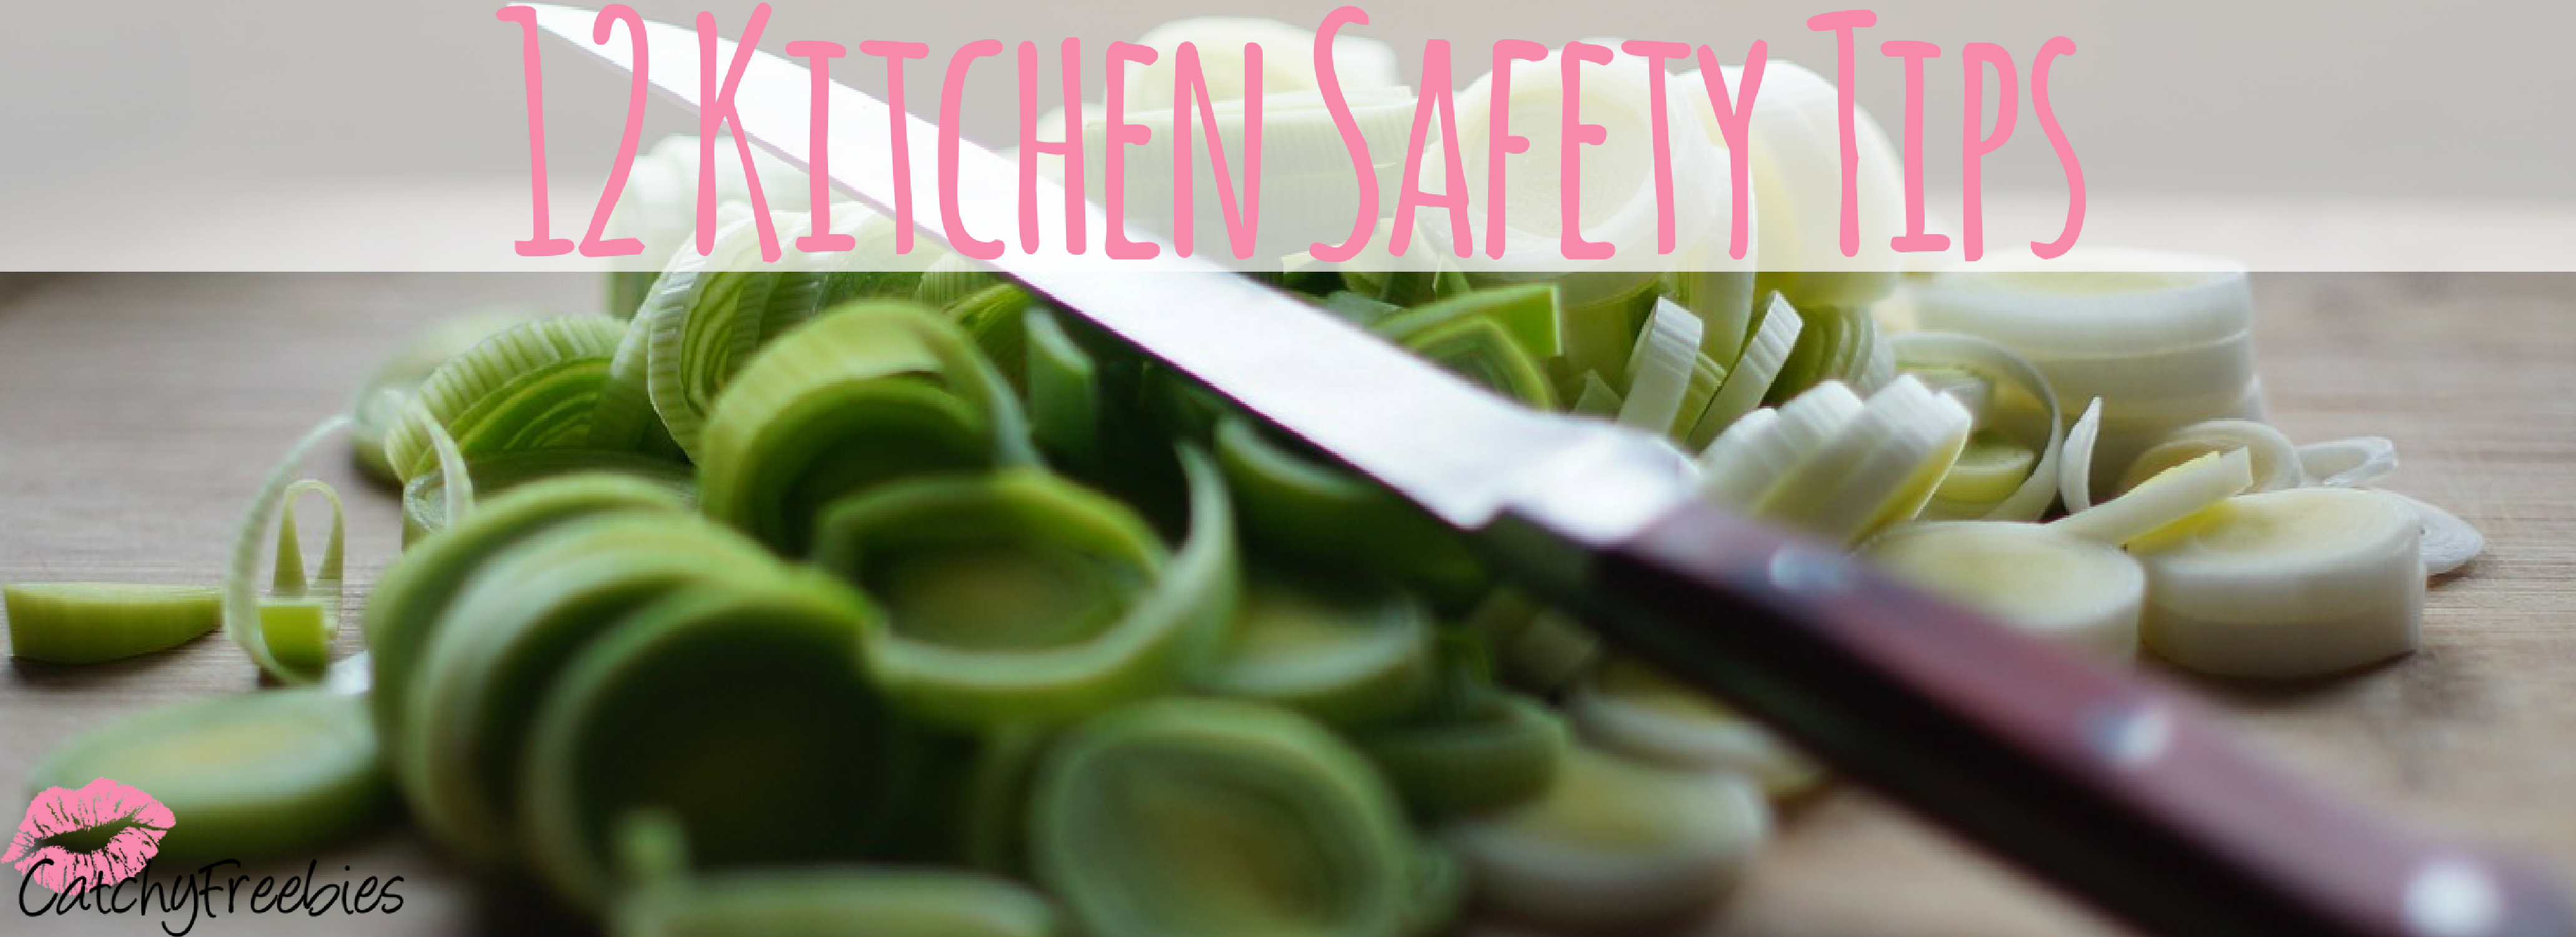 12 Kitchen Safety Tips